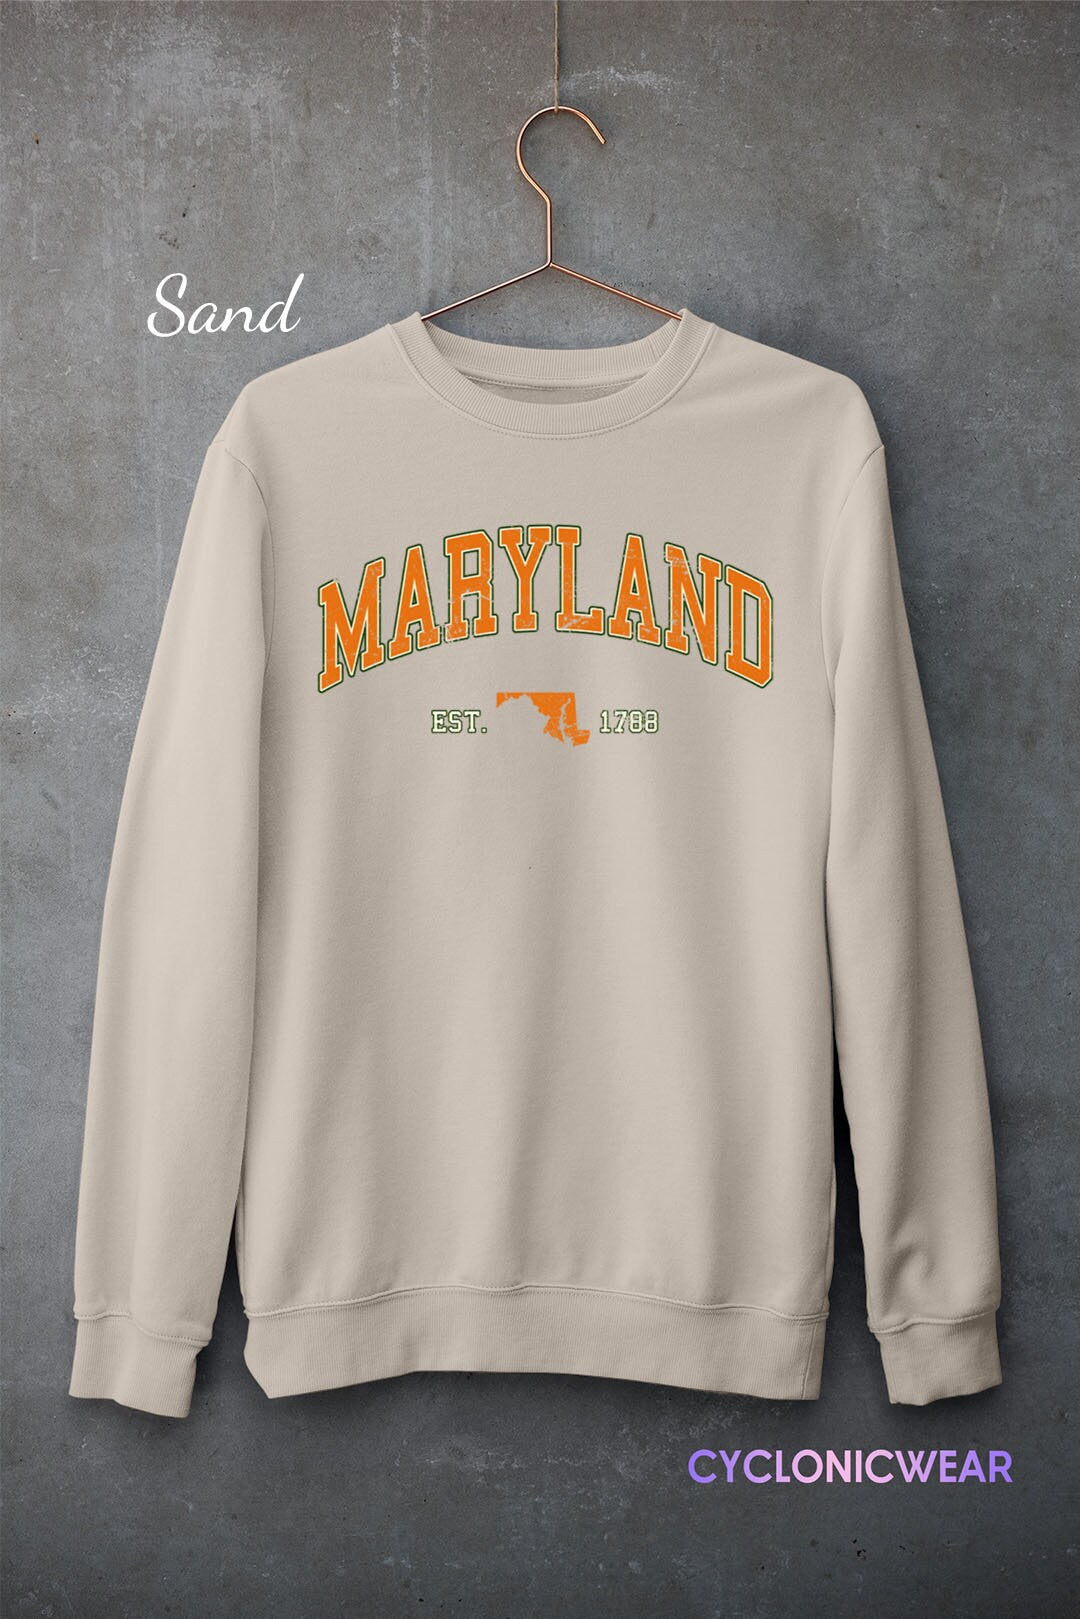 Vintage Maryland Sweatshirt, Maryland College Sweater, University Student Sweater, USA Travel Gift, Sports Fan, Maryland Unisex Sweater